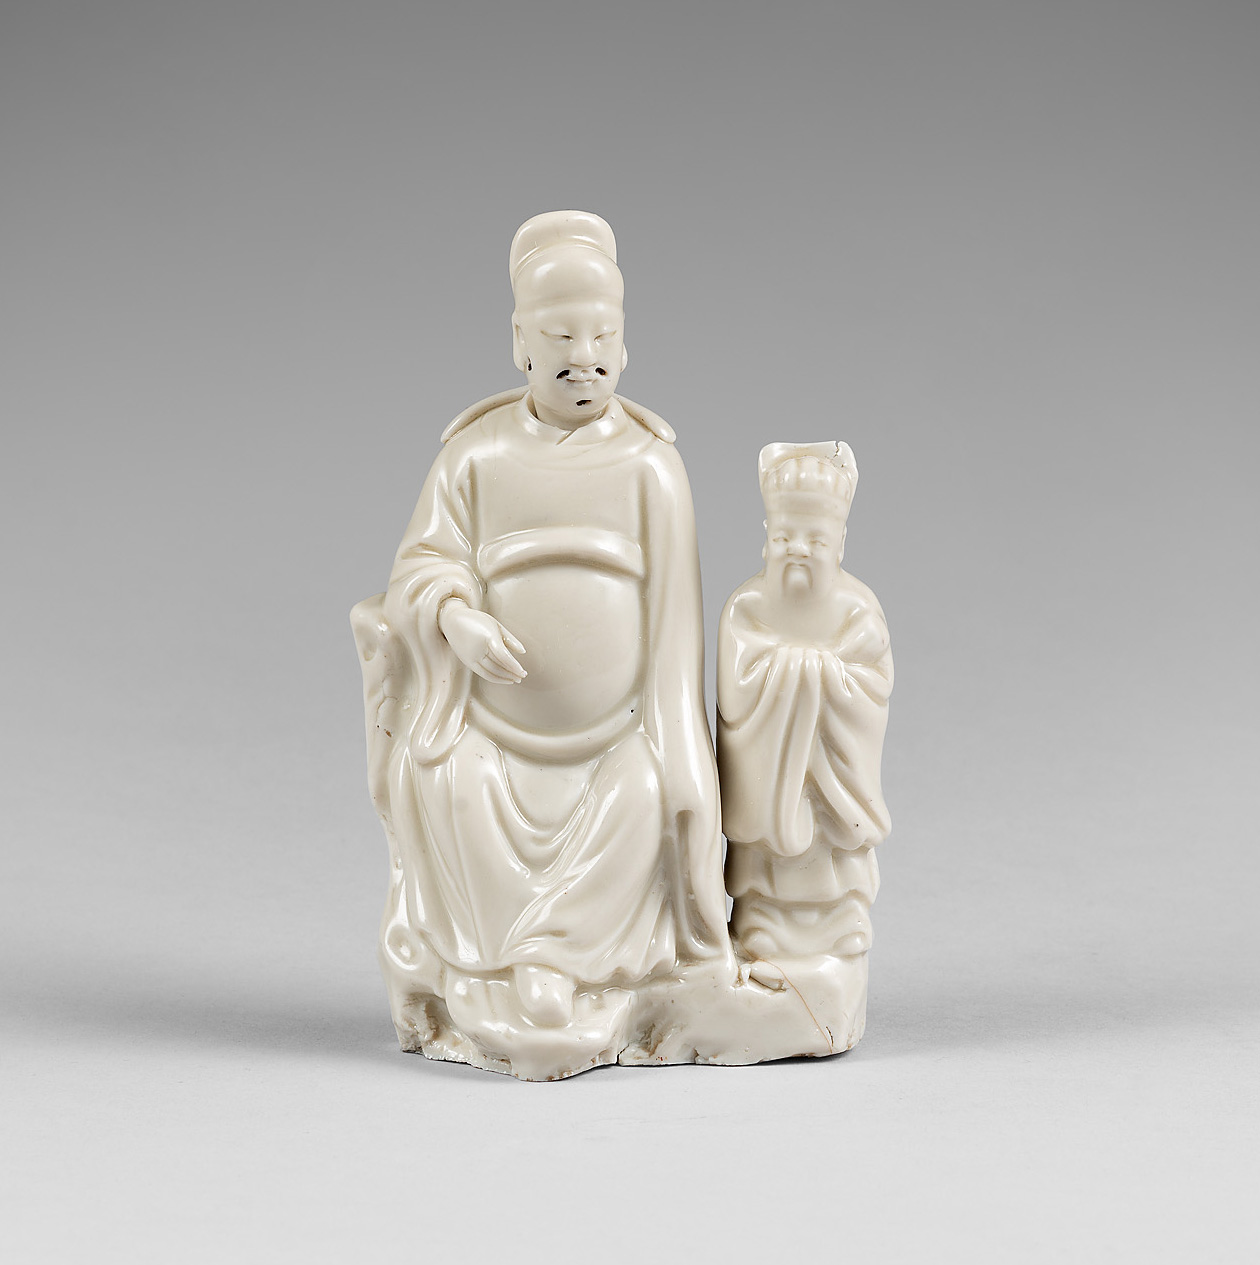 Porcelain Late Ming dynasty, ca. 1640, China (Dehua)